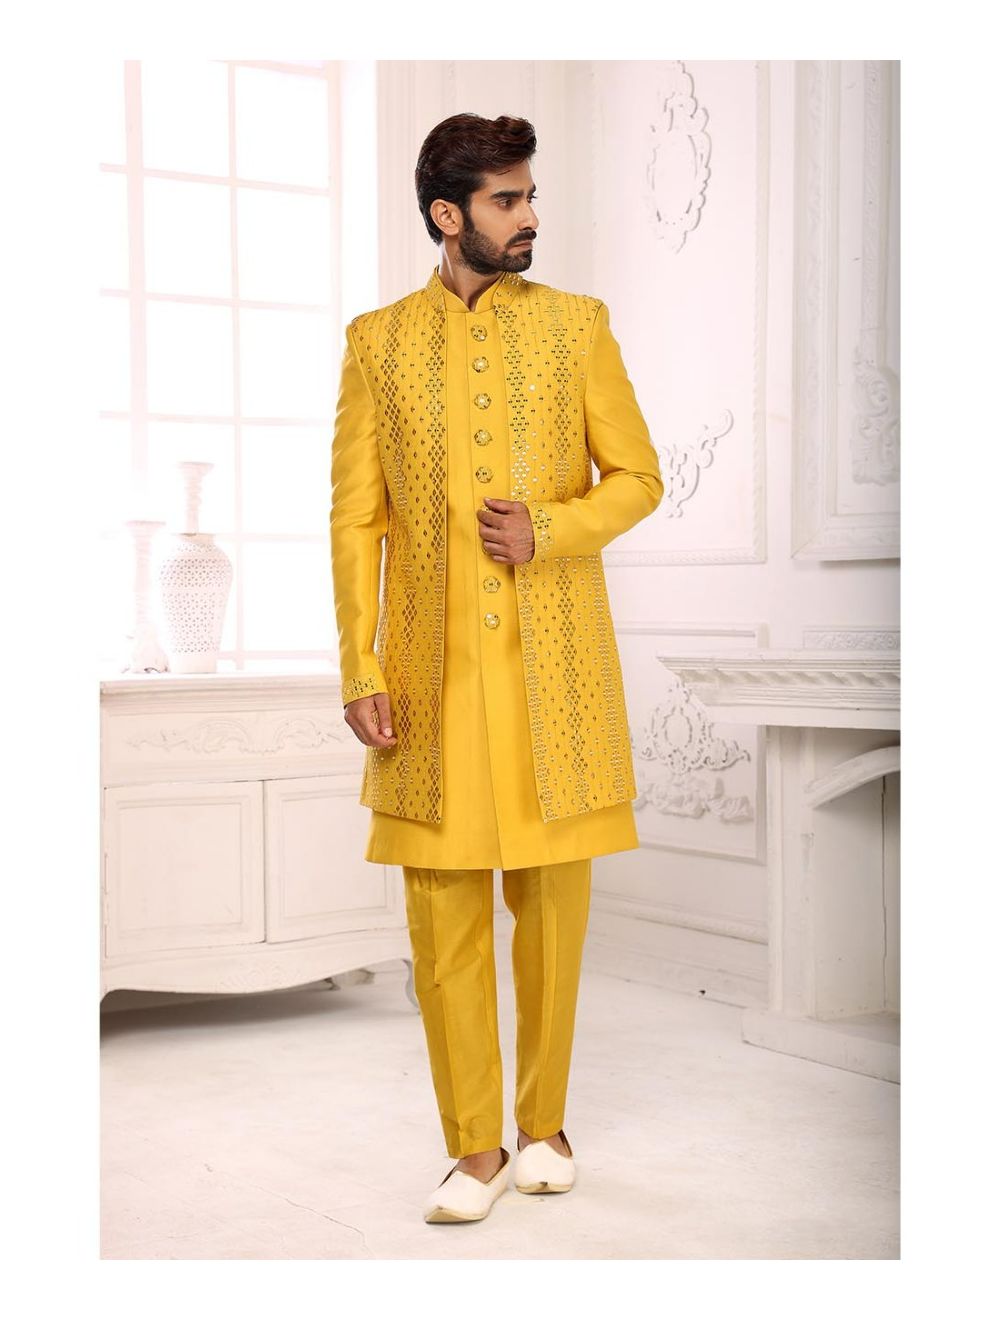 Groom Dulha Wedding Sherwani Complete Dress 2023 Latest Outfit - Men -  1754555650